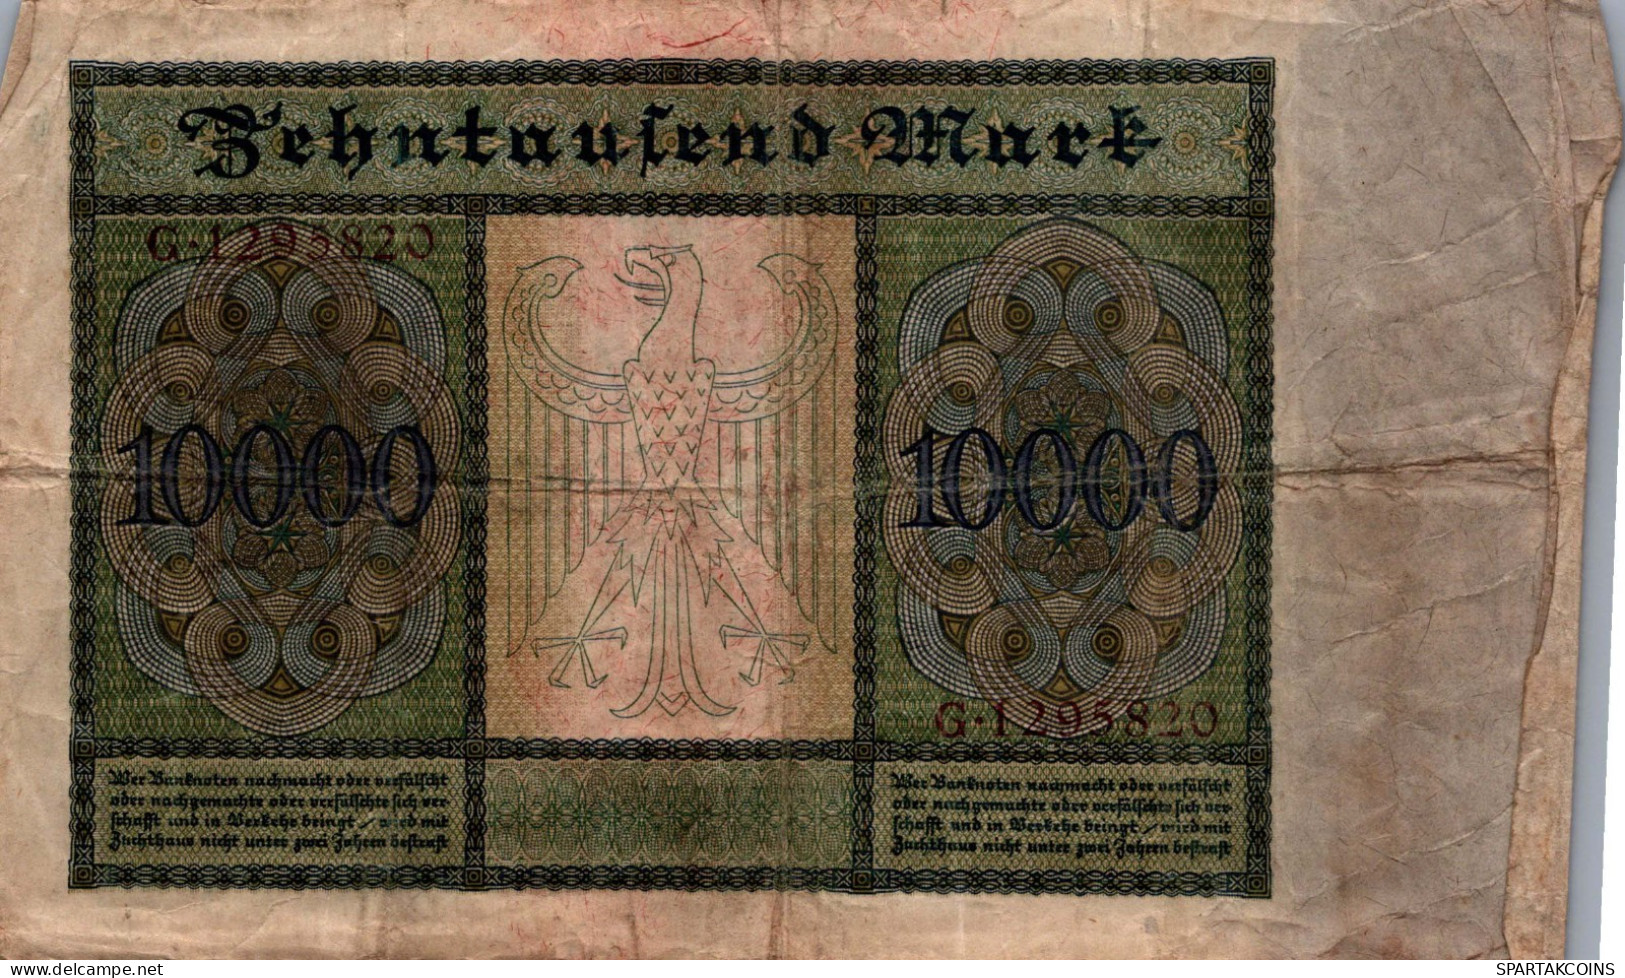 10000 MARK 1922 Stadt BERLIN DEUTSCHLAND Papiergeld Banknote #PL162 - [11] Lokale Uitgaven